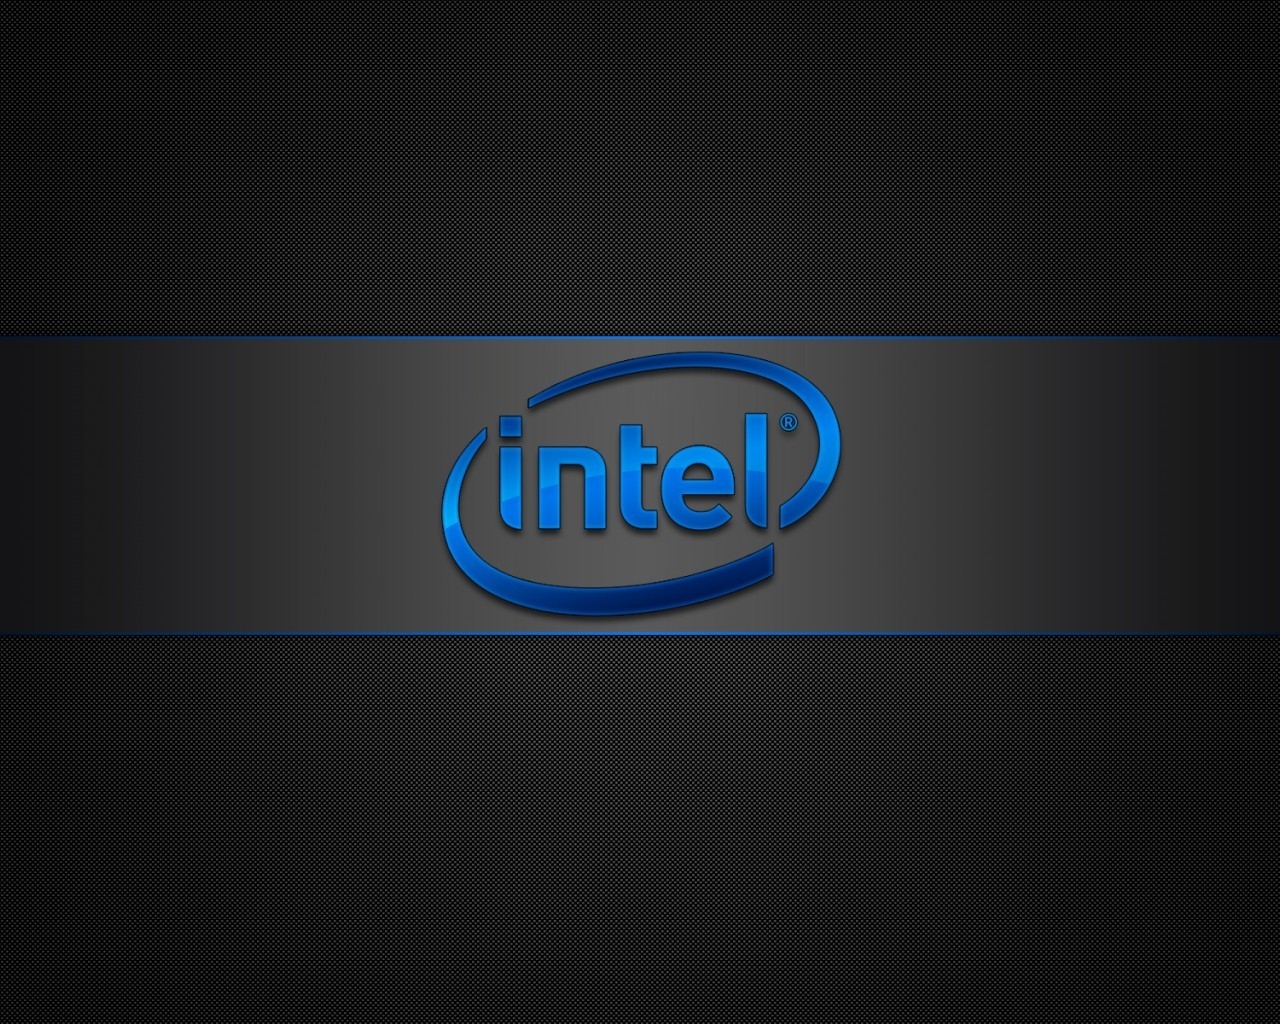 Intel for 1280 x 1024 resolution